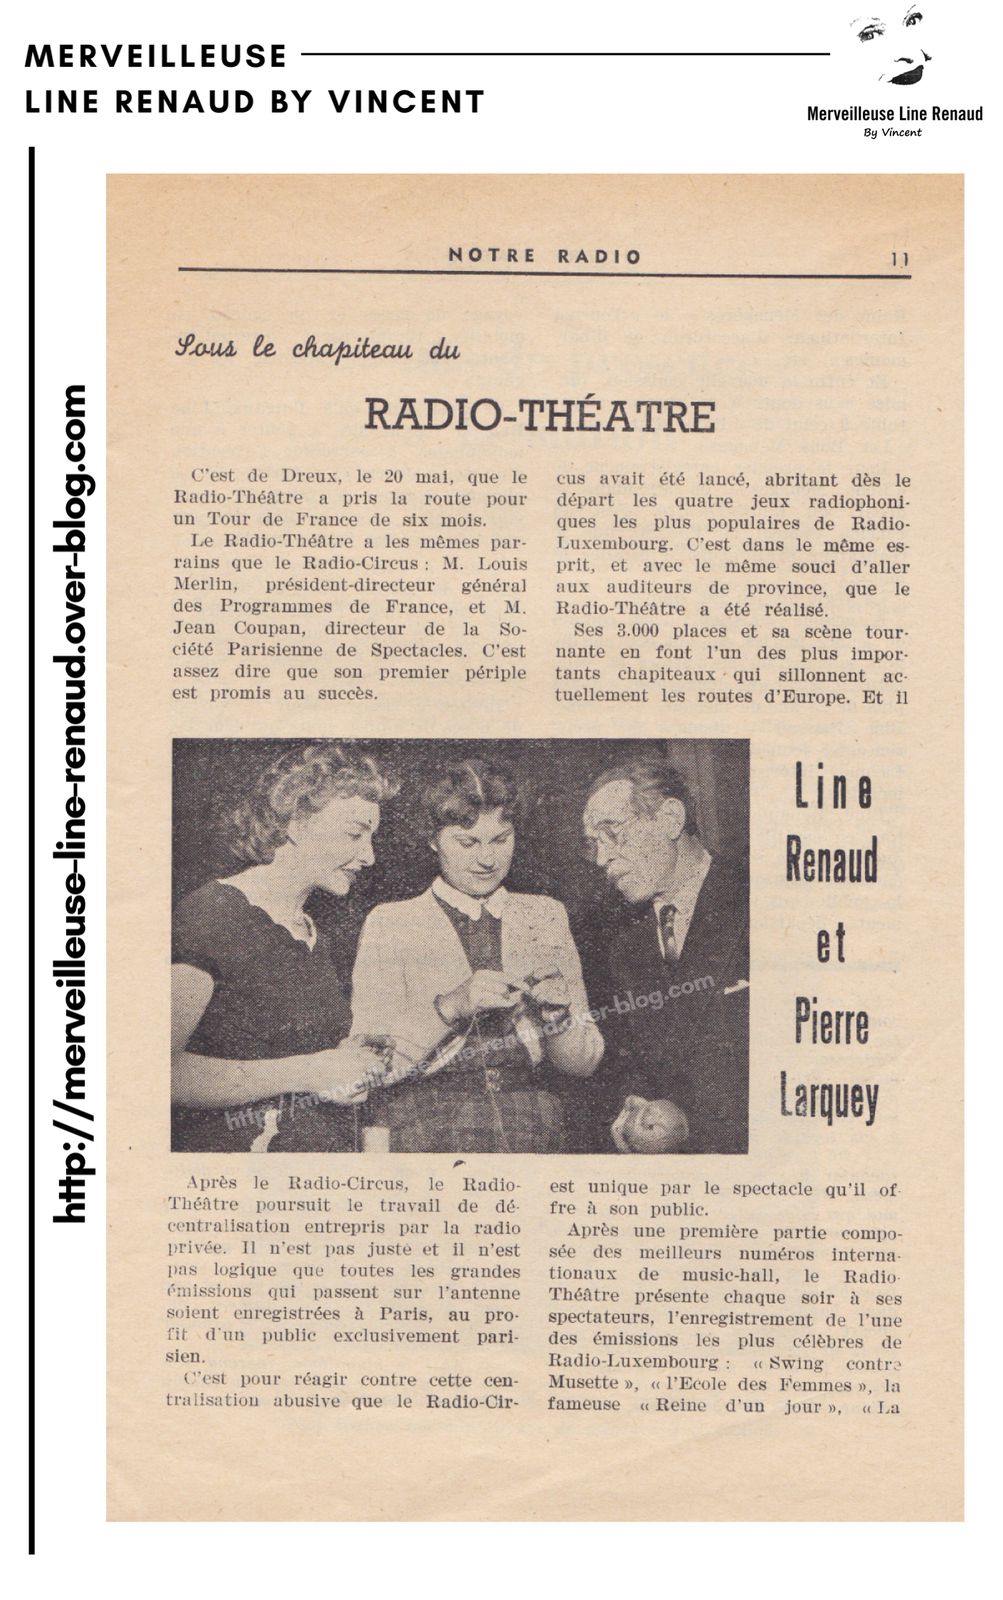 PRESSE: Notre Radio - n°9 - Juin 1952